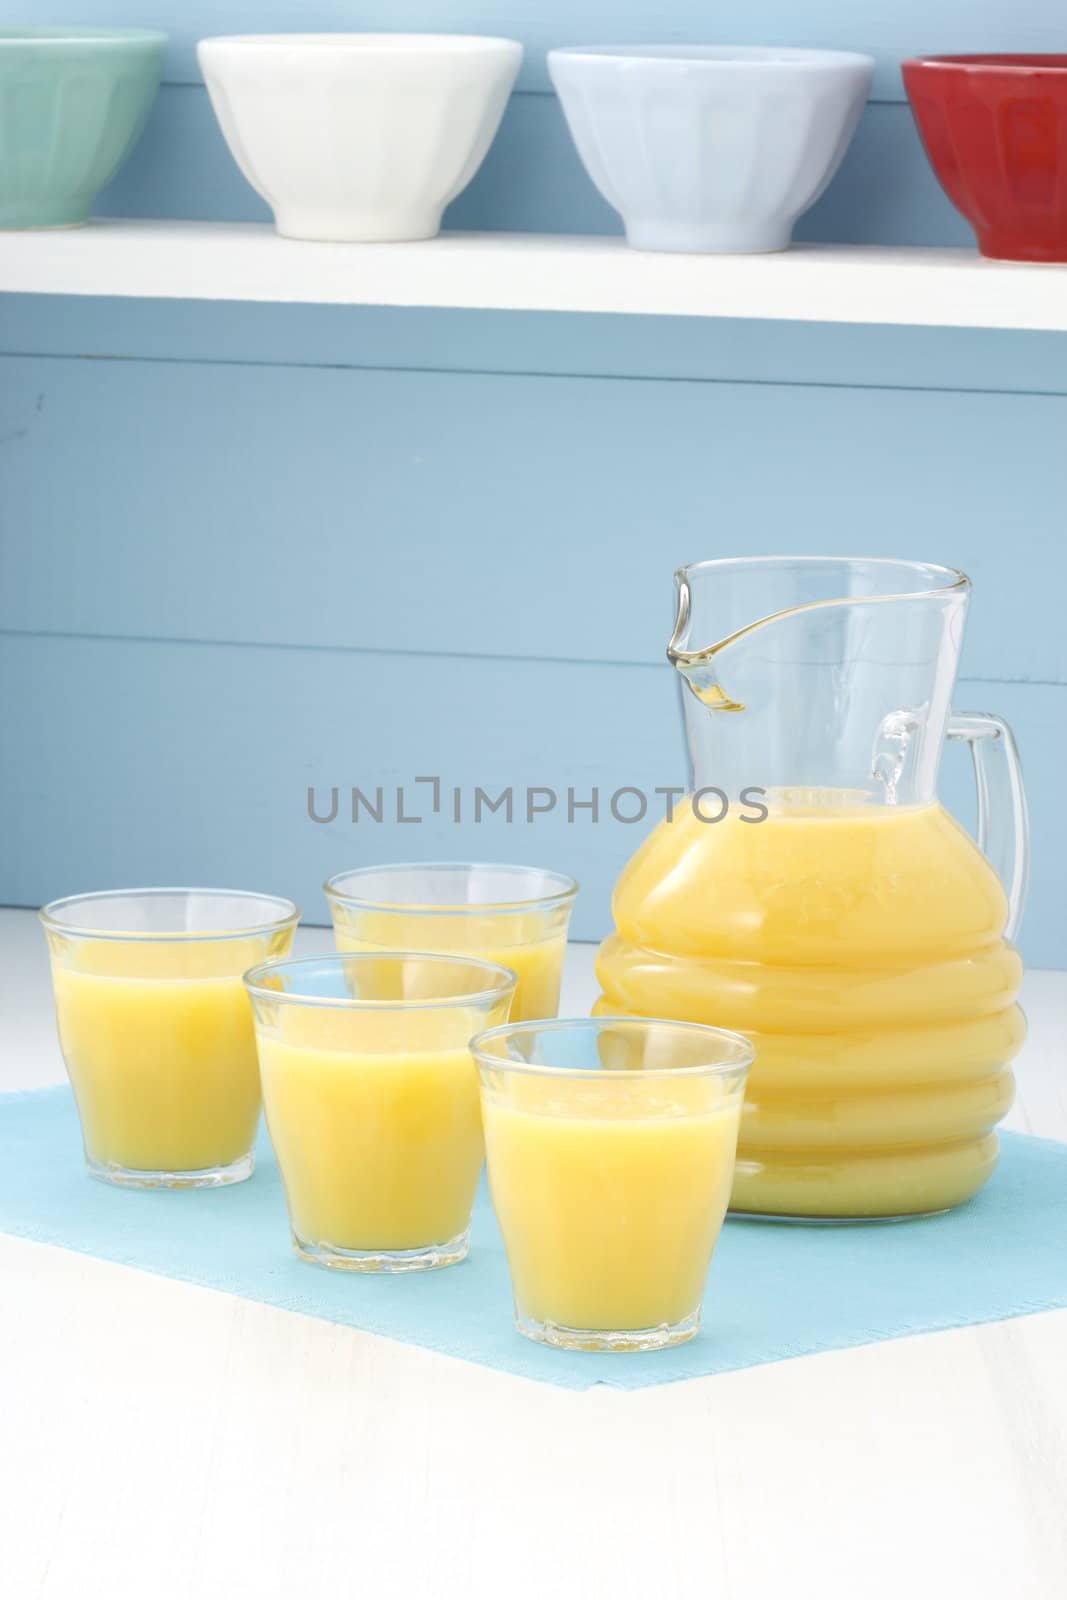 Fresh squeezed orange juice by tacar